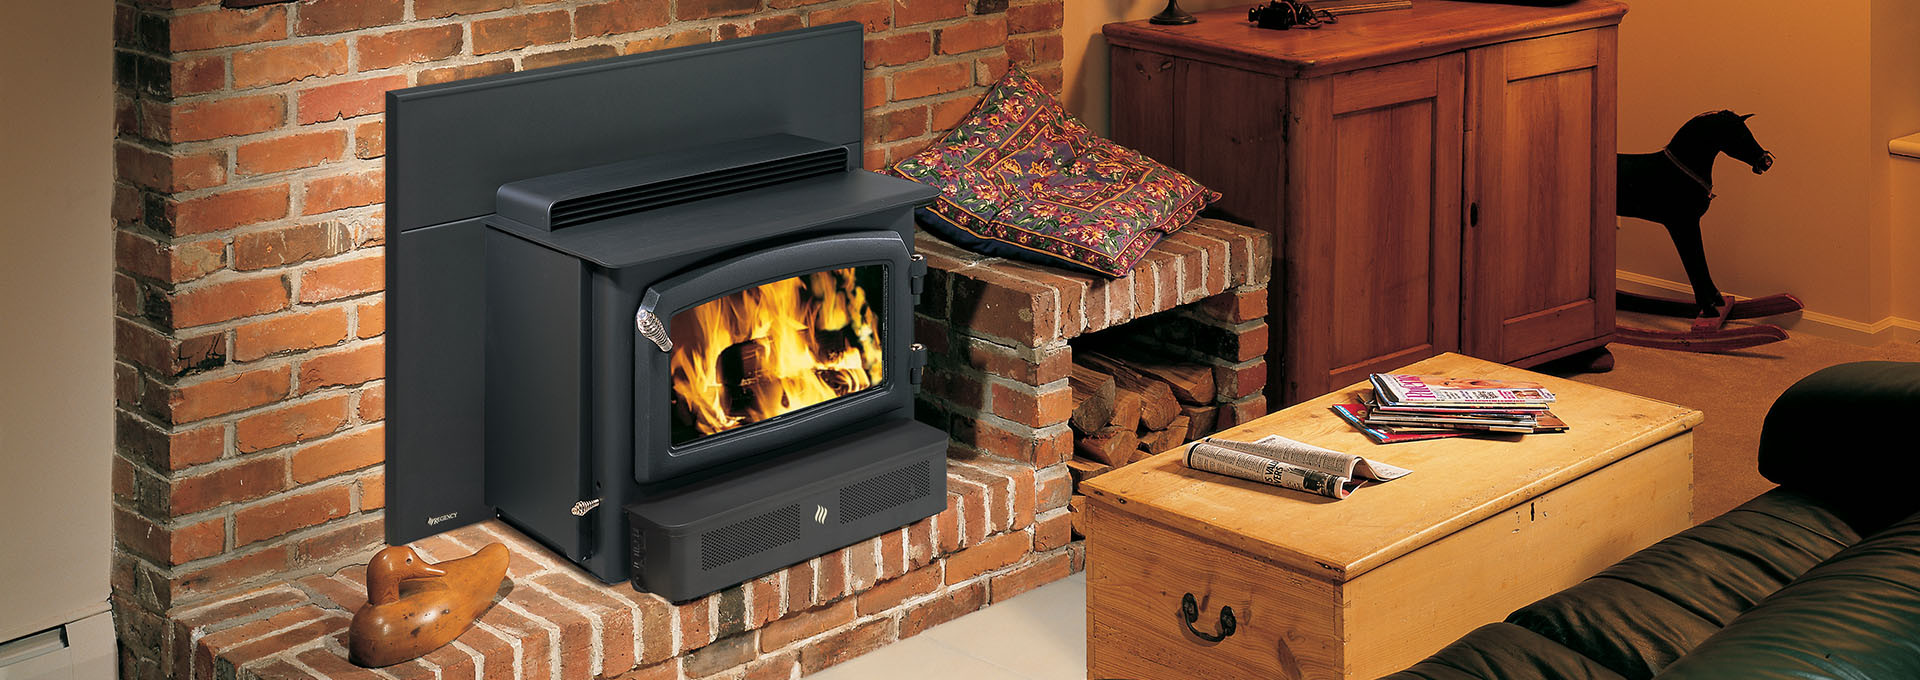 Best ideas about Regency Fireplace Insert
. Save or Pin H2100 Wood Insert Wood Fireplace Inserts Regency Now.